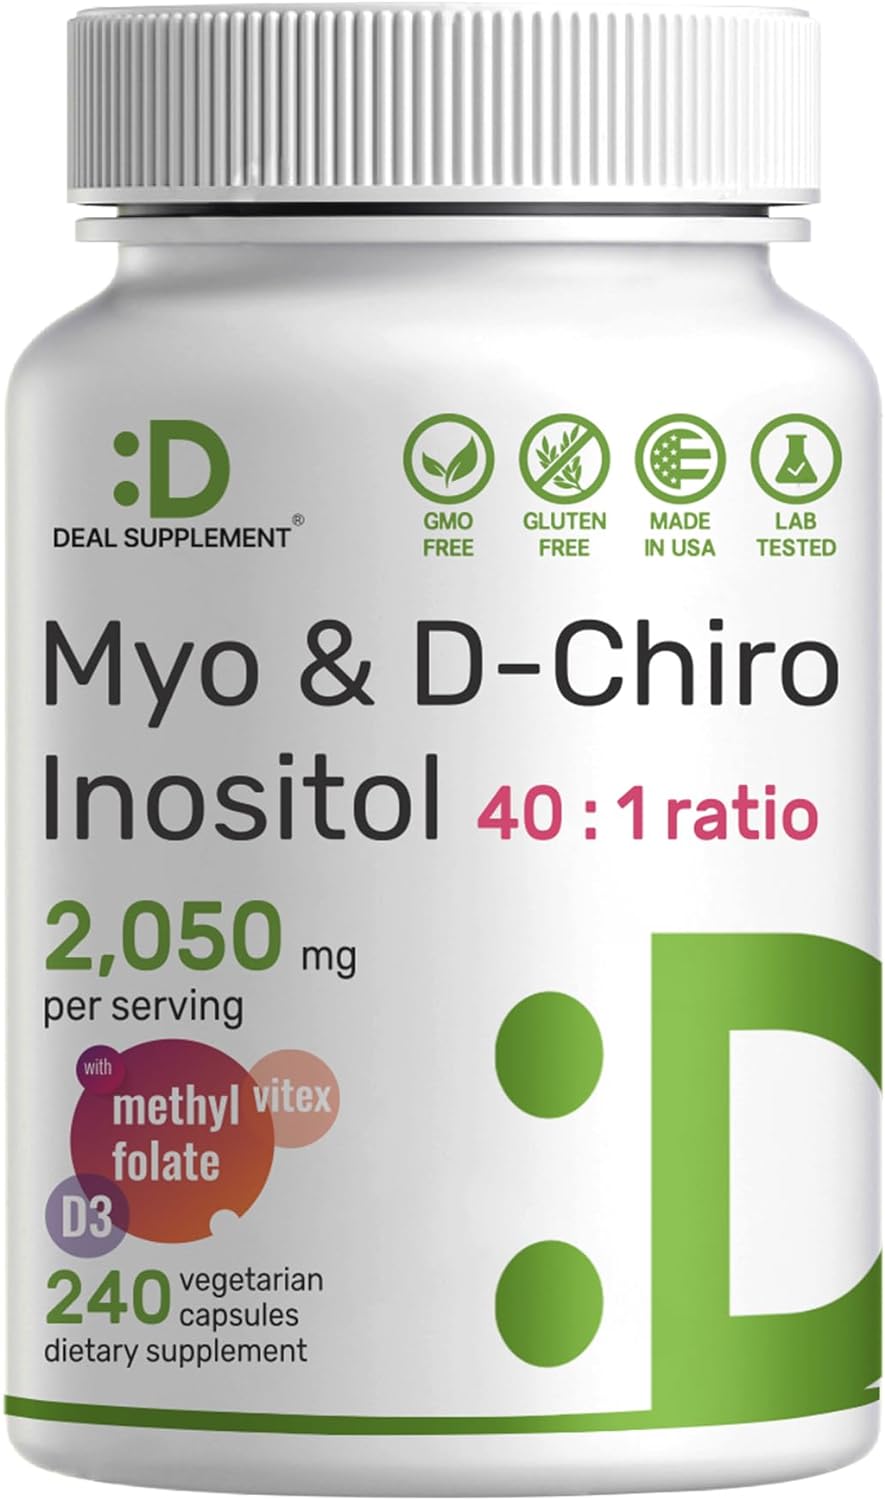 Myo-Inositol & D-Chiro Inositol Supplement (40:1) 2,050mg Per Serving, 240 Veggie Capsules – with Folate, Vitamin D3, & Vitex Complex – Women Health Supplements – Non-GMO